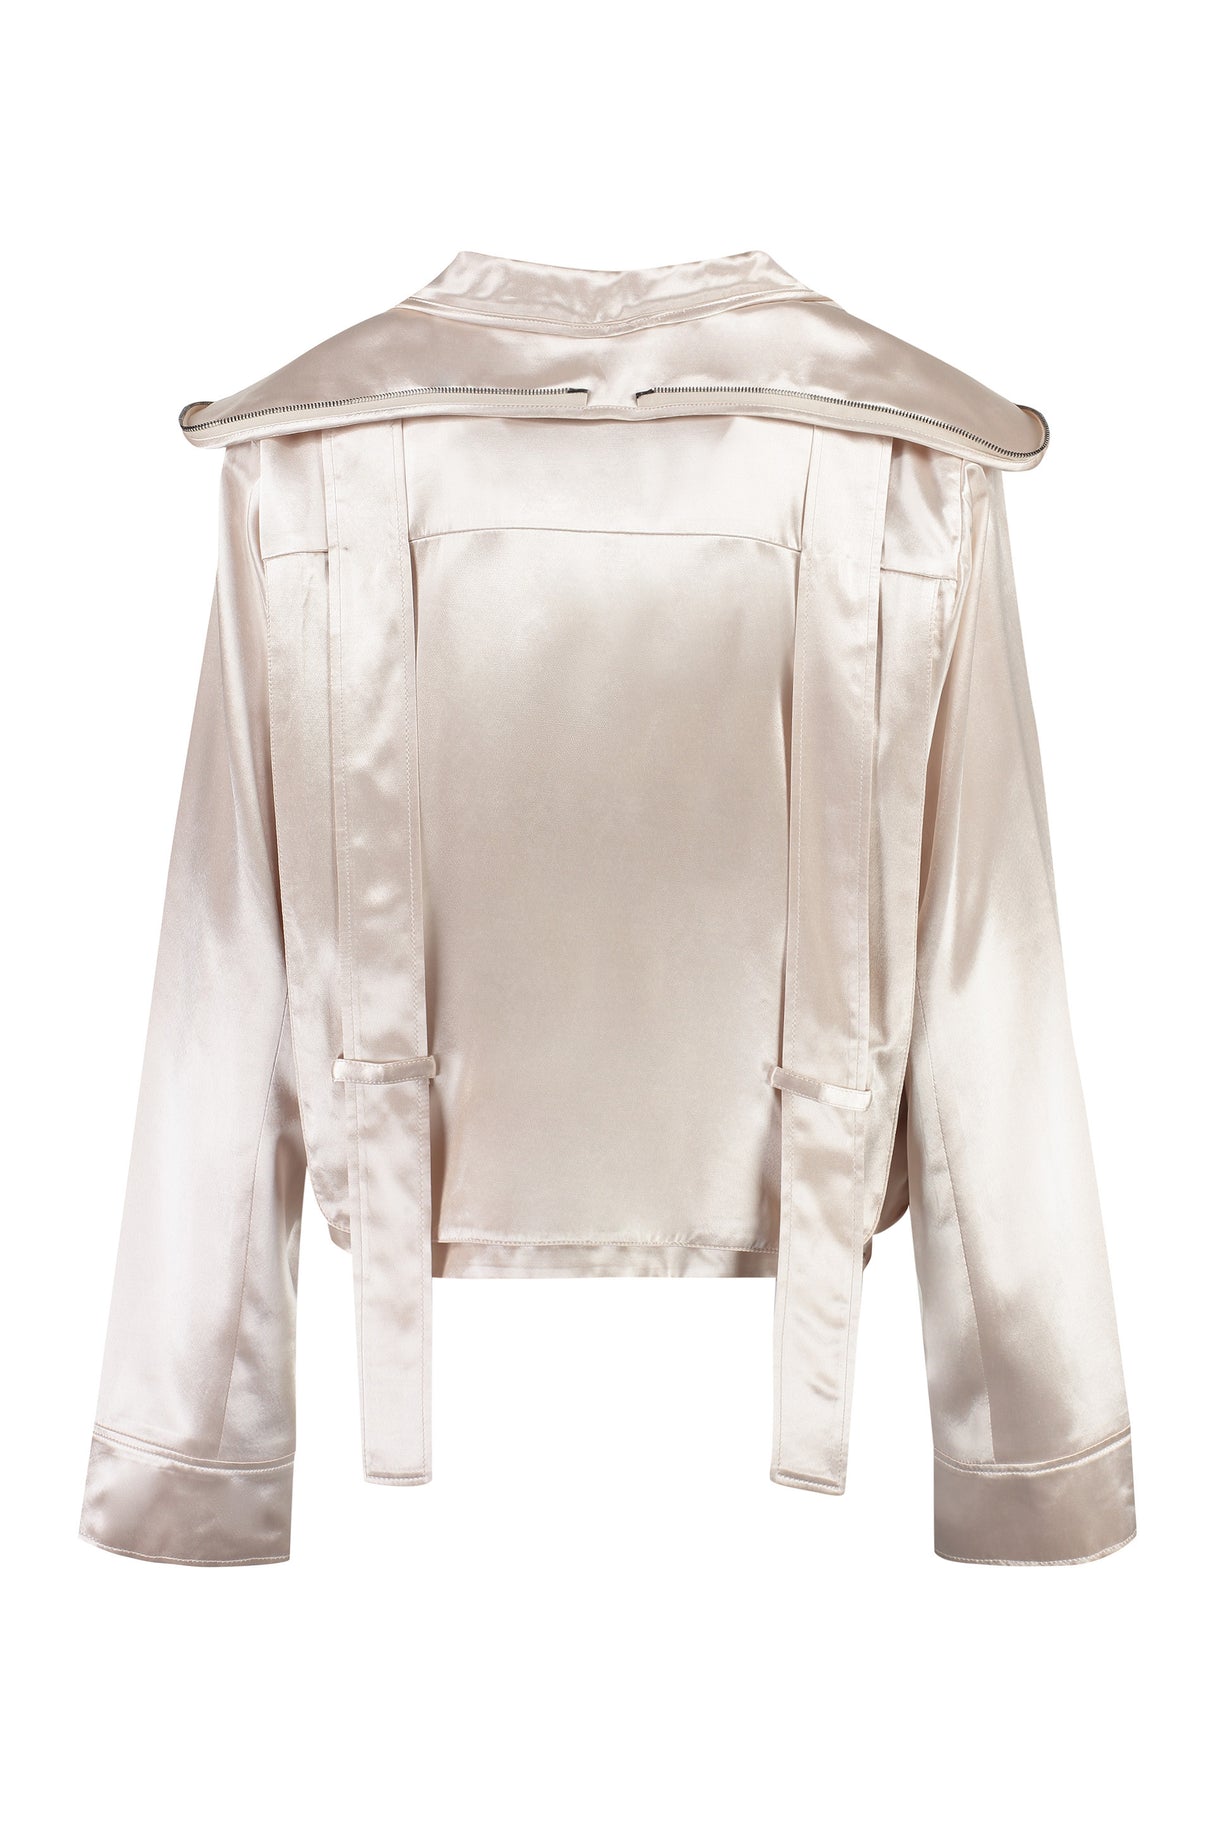 FENDI Light Beige Oversize Satin Jacket with Zip Detail & Baguette Pockets